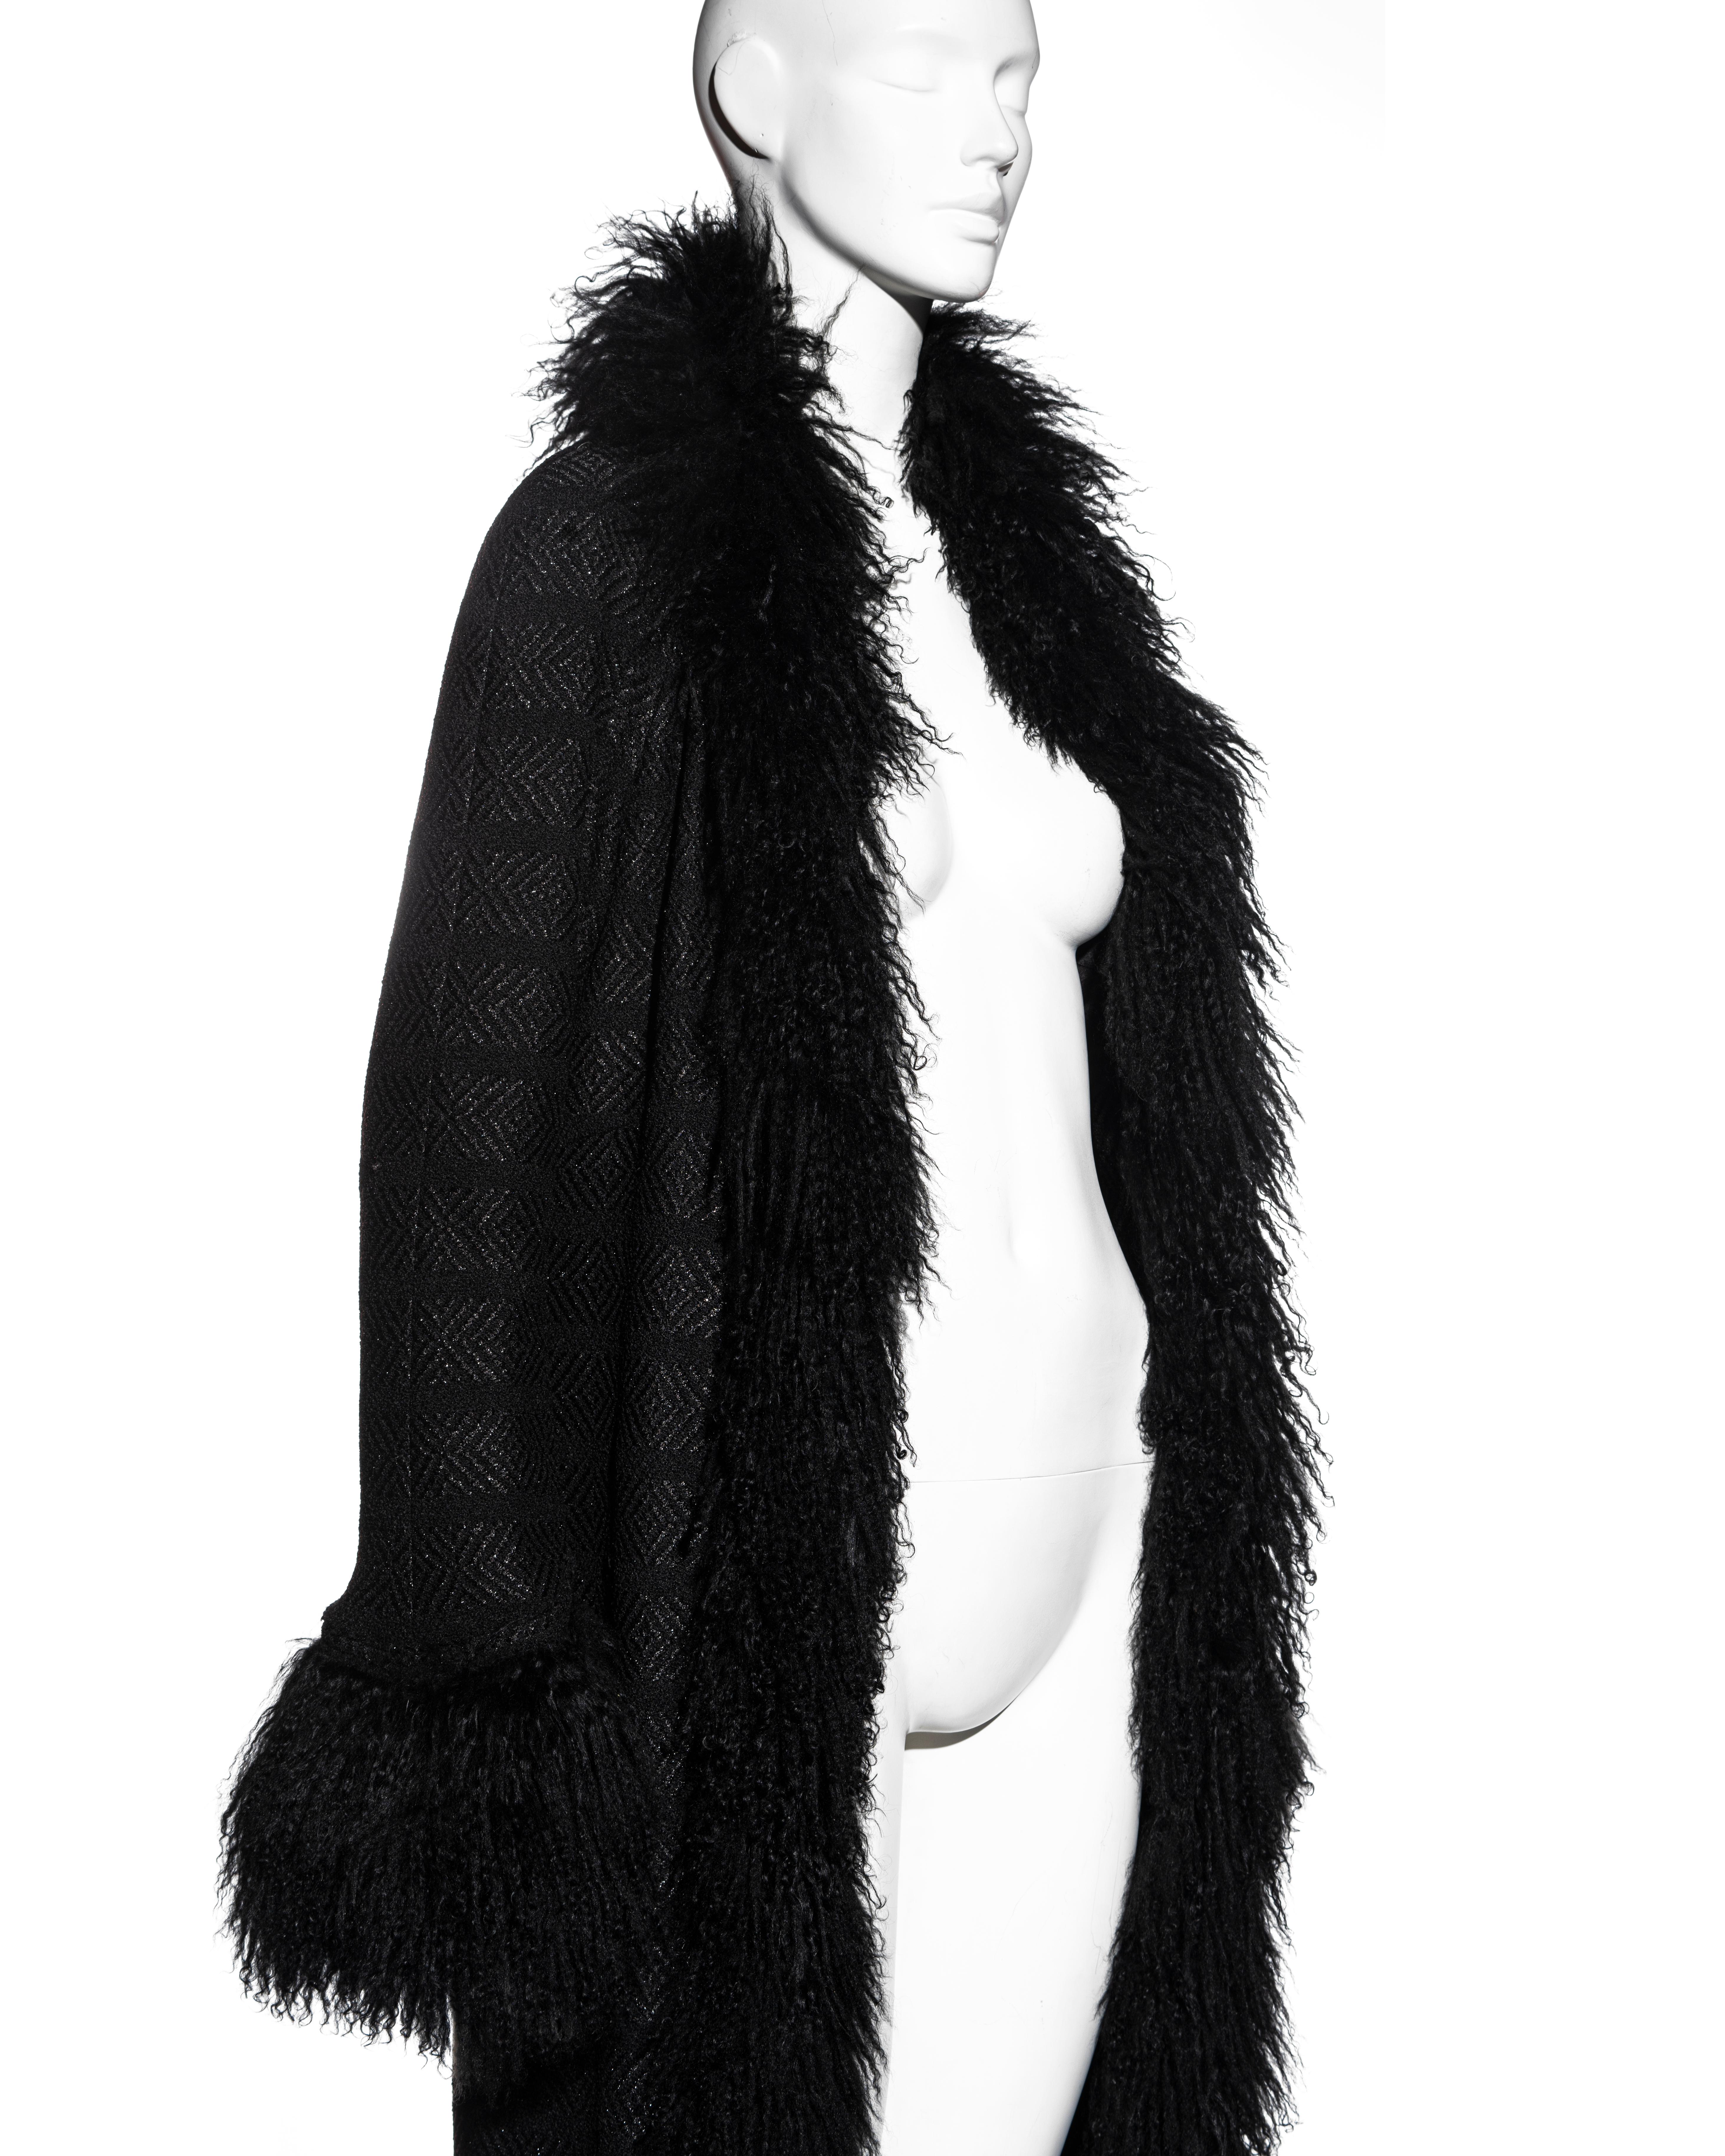 Chanel by Karl Lagerfeld black tweed and Mongolian lambs wool coat, fw 2008 1